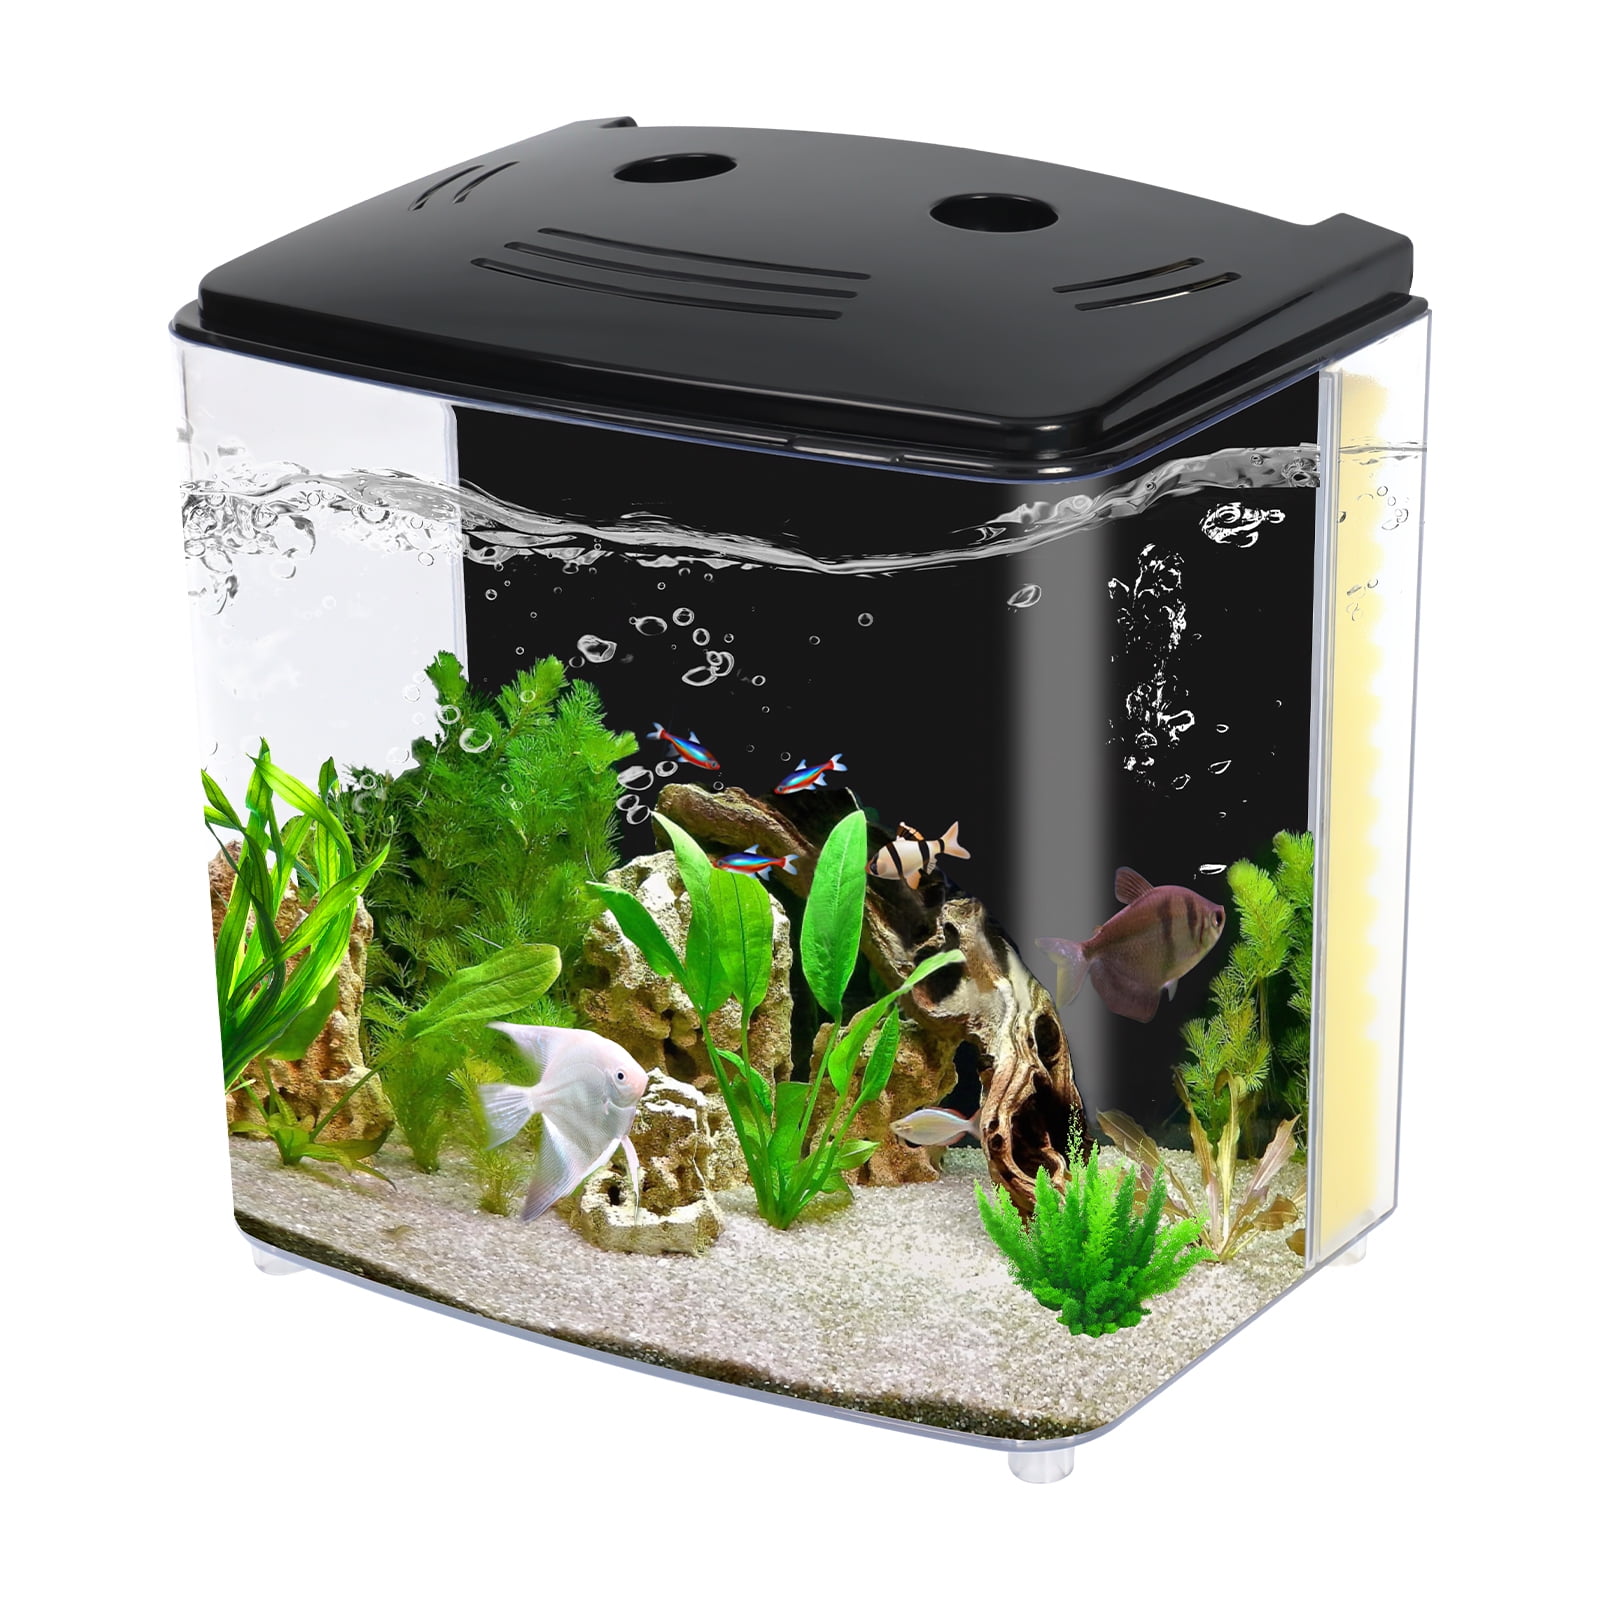 Aquaneat Fish Tank, 1.2 Gallon Aquarium, Small Betta Fish Tank